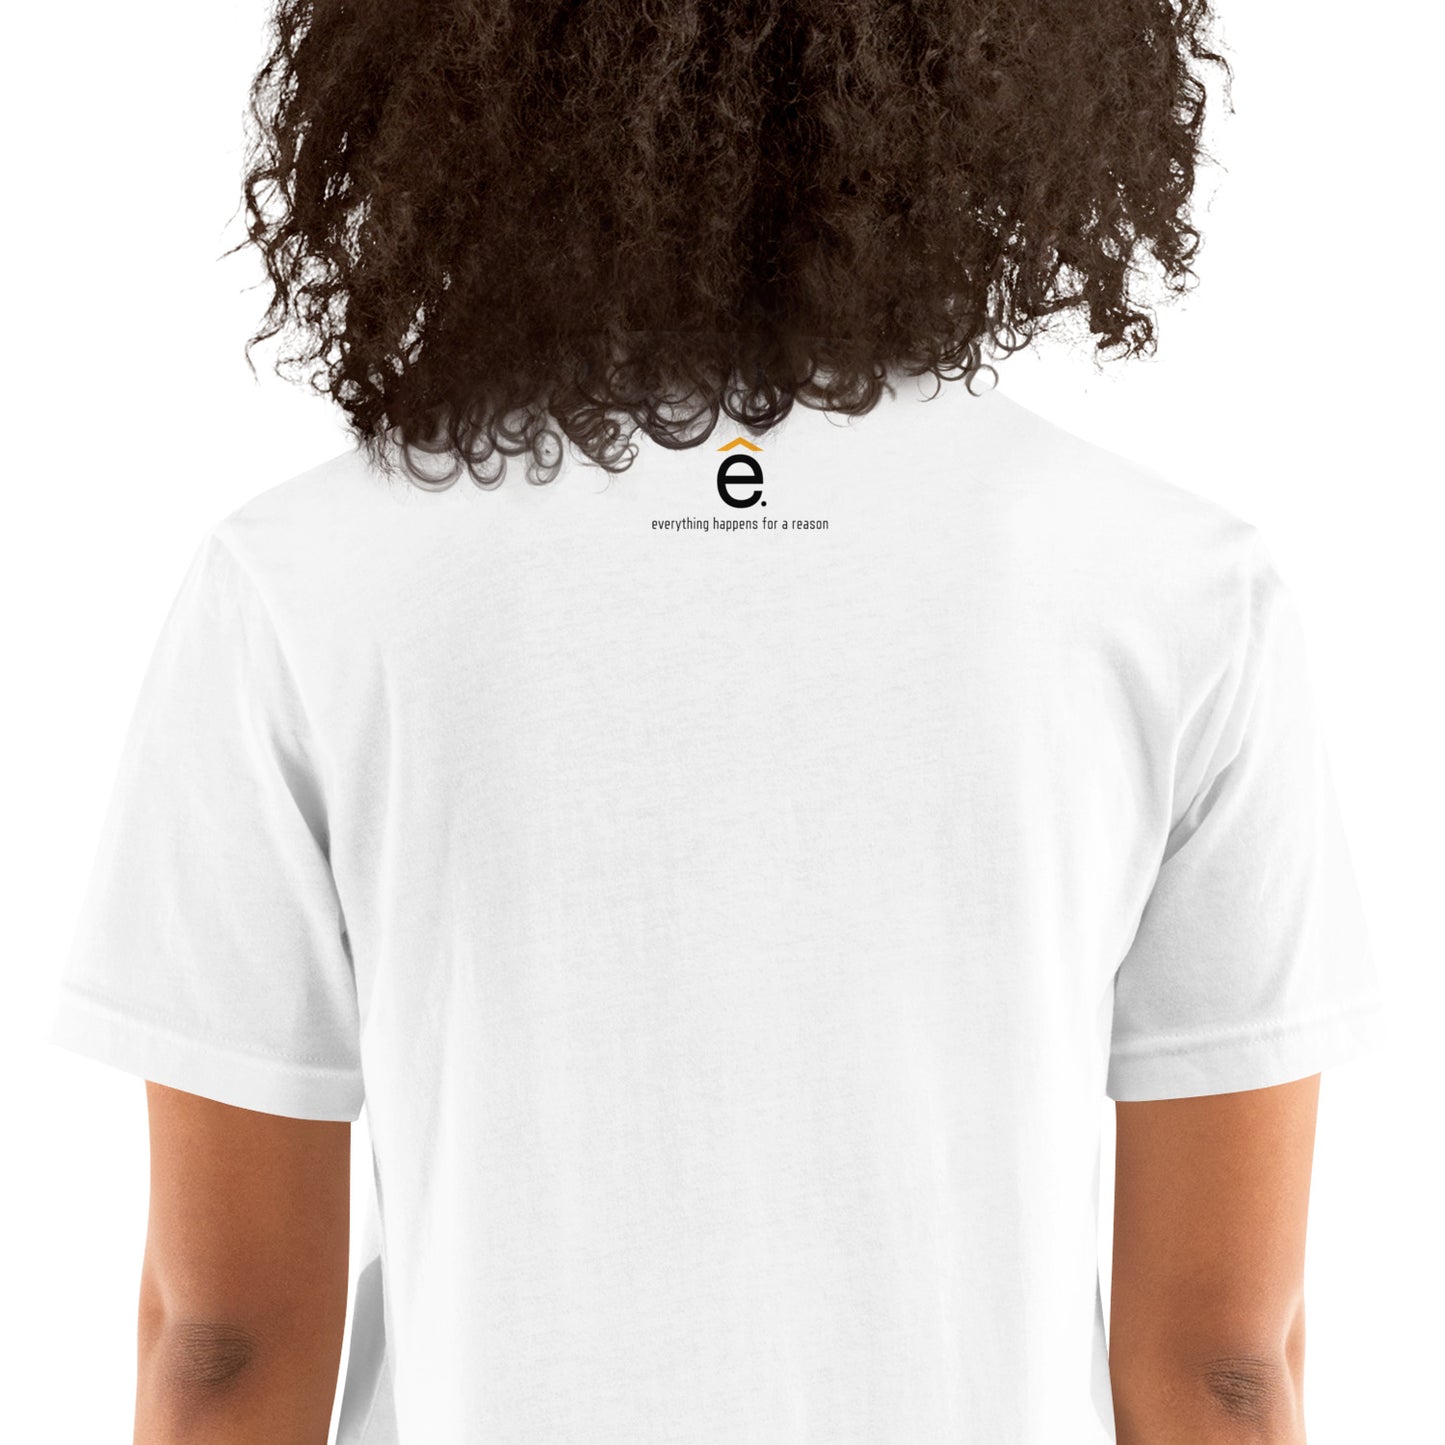 ehfar Unisex t-shirt (dark lettering)